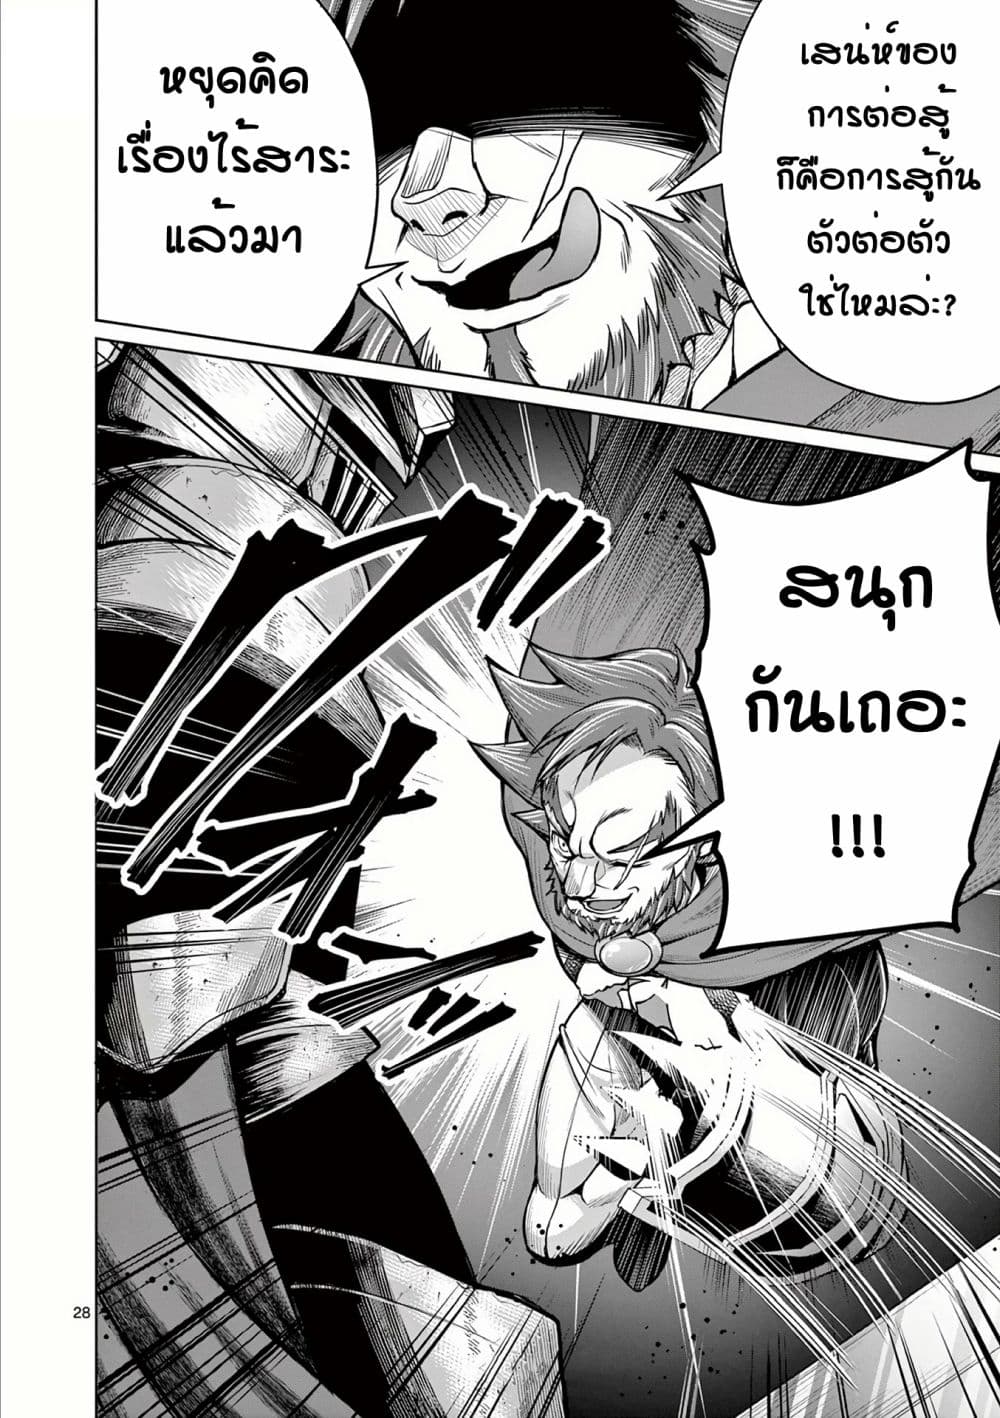 Moto Shogun no Undead Knight 10 (28)